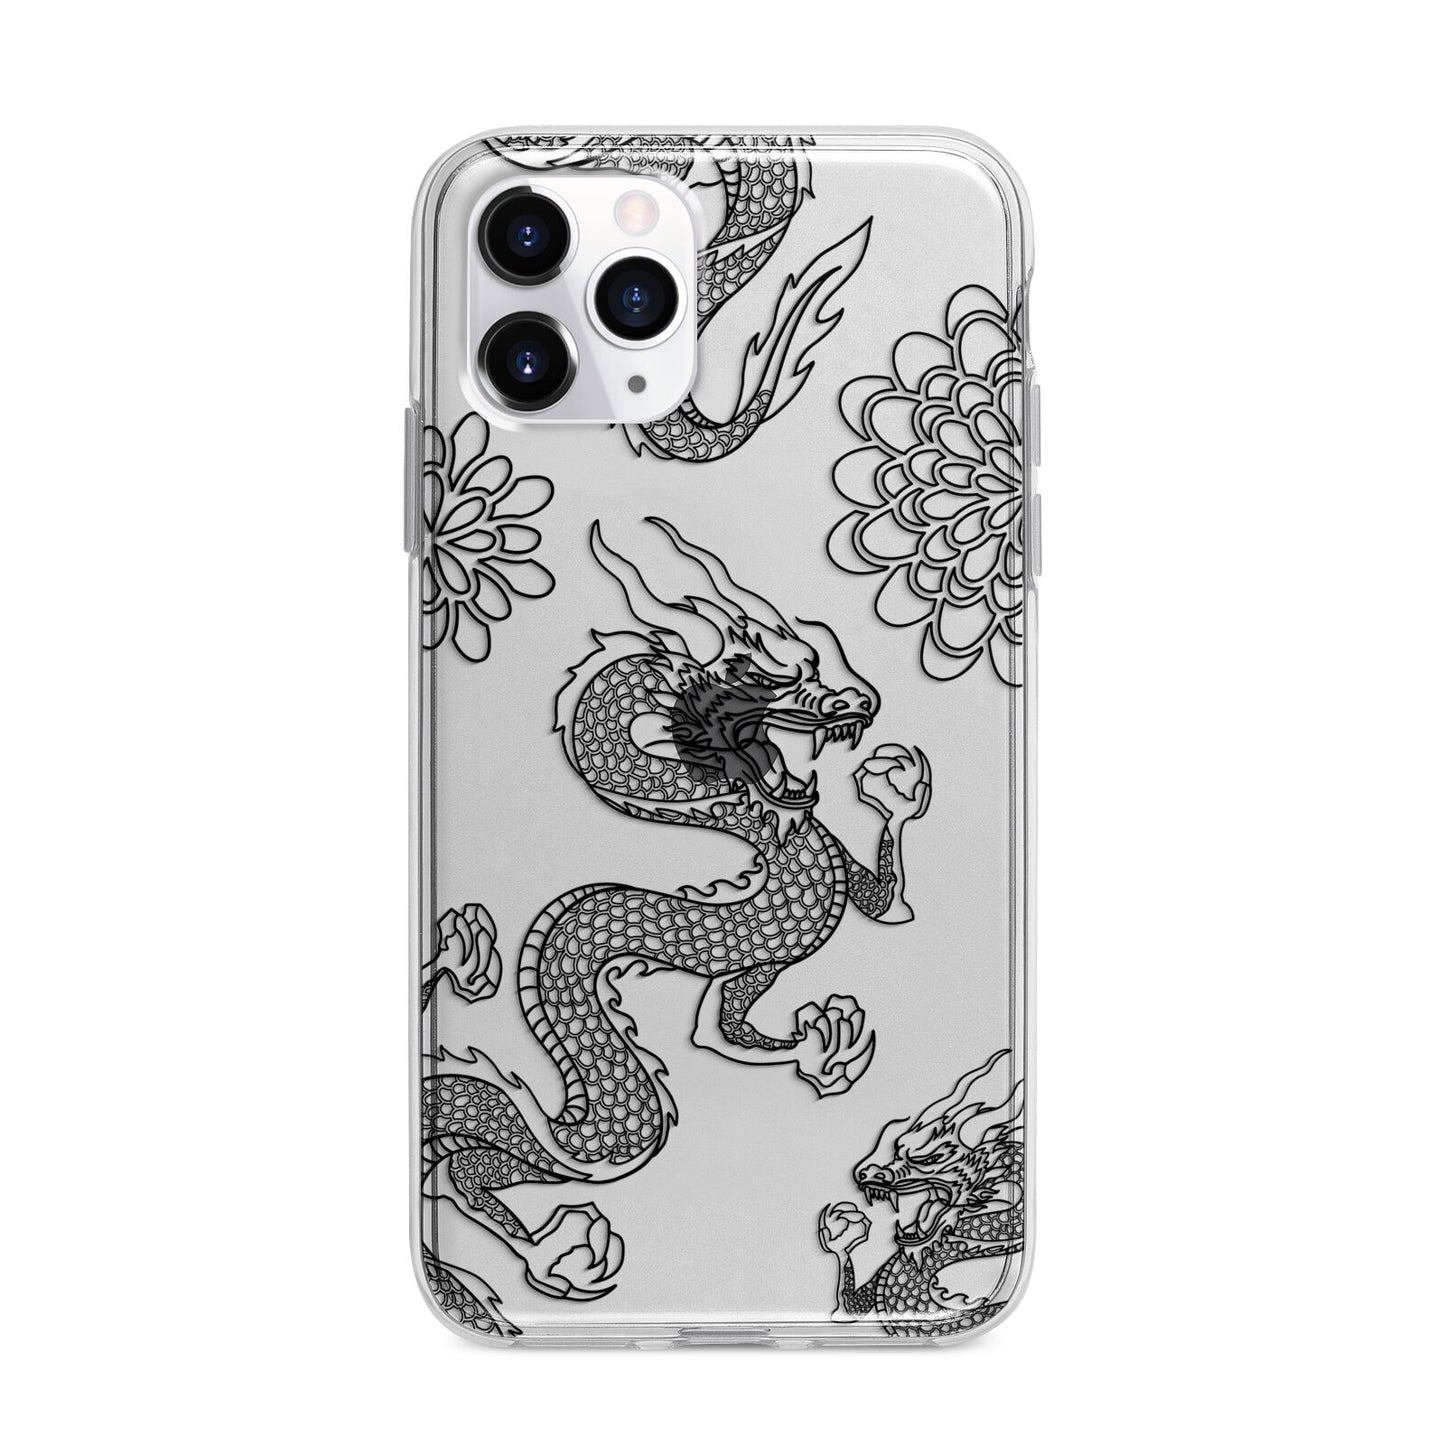 Black Dragon Apple iPhone 11 Pro Max in Silver with Bumper Case